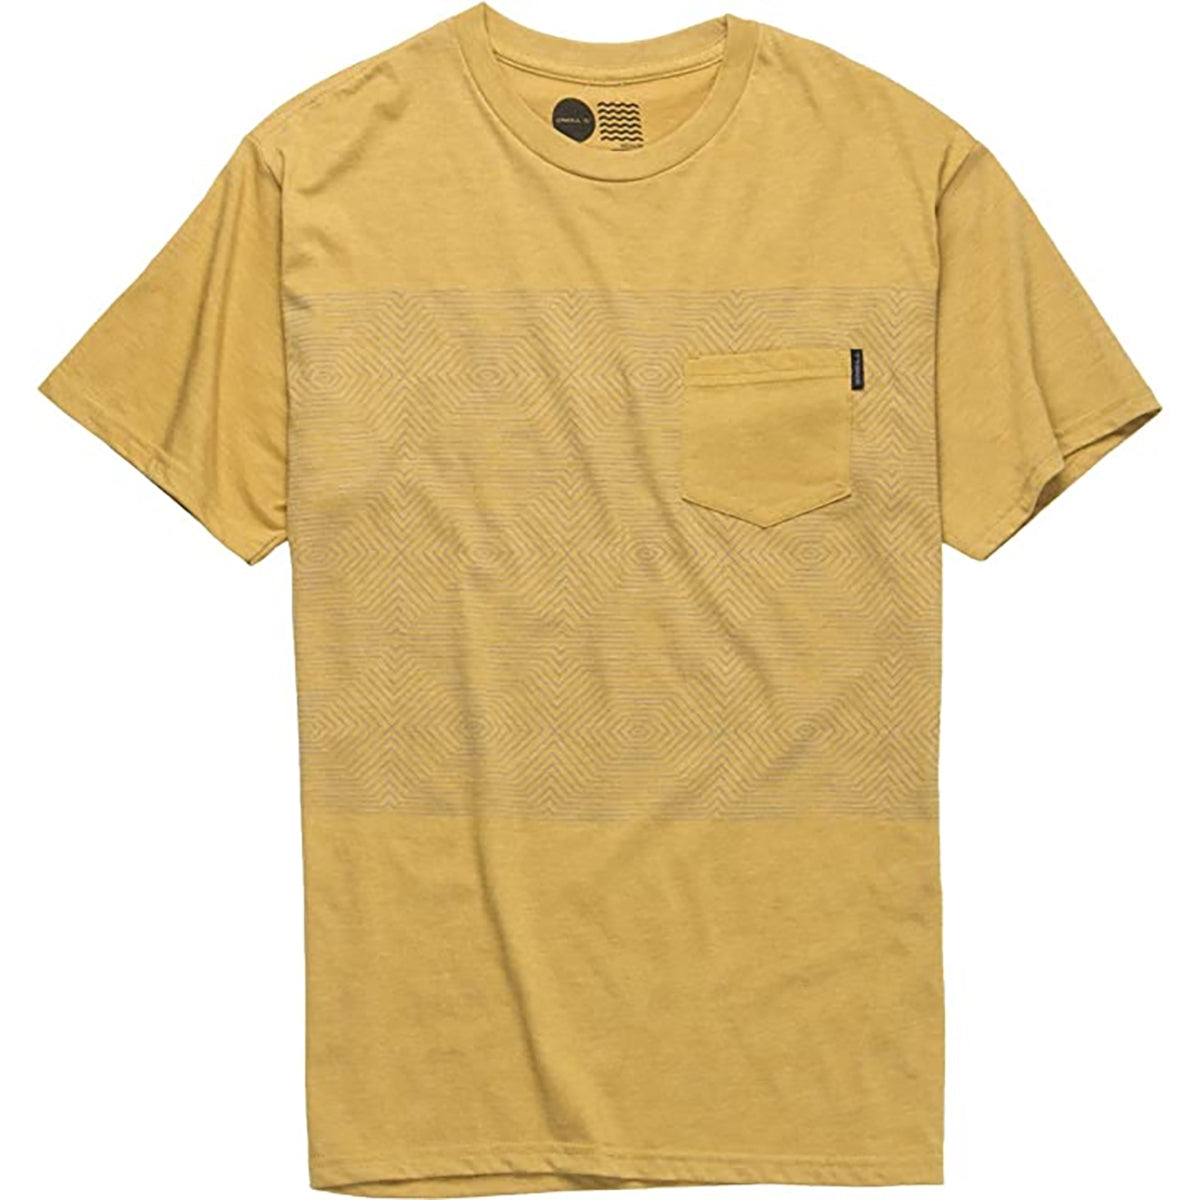 O'Neill Diamond Zag Men's Short-Sleeve Shirts - Harvest Gold